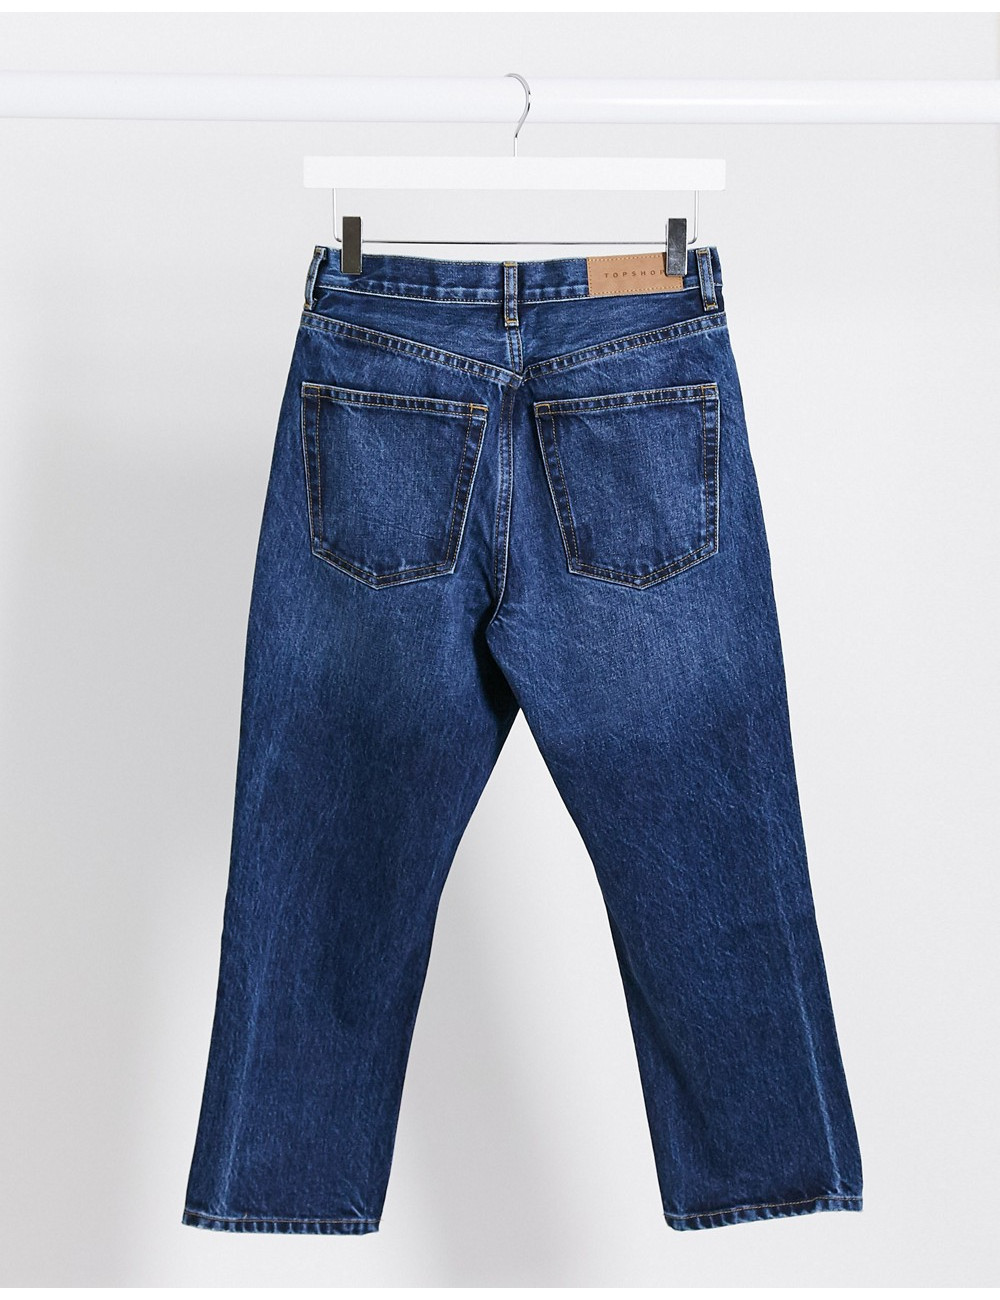 Topshop Petite Editor jeans...